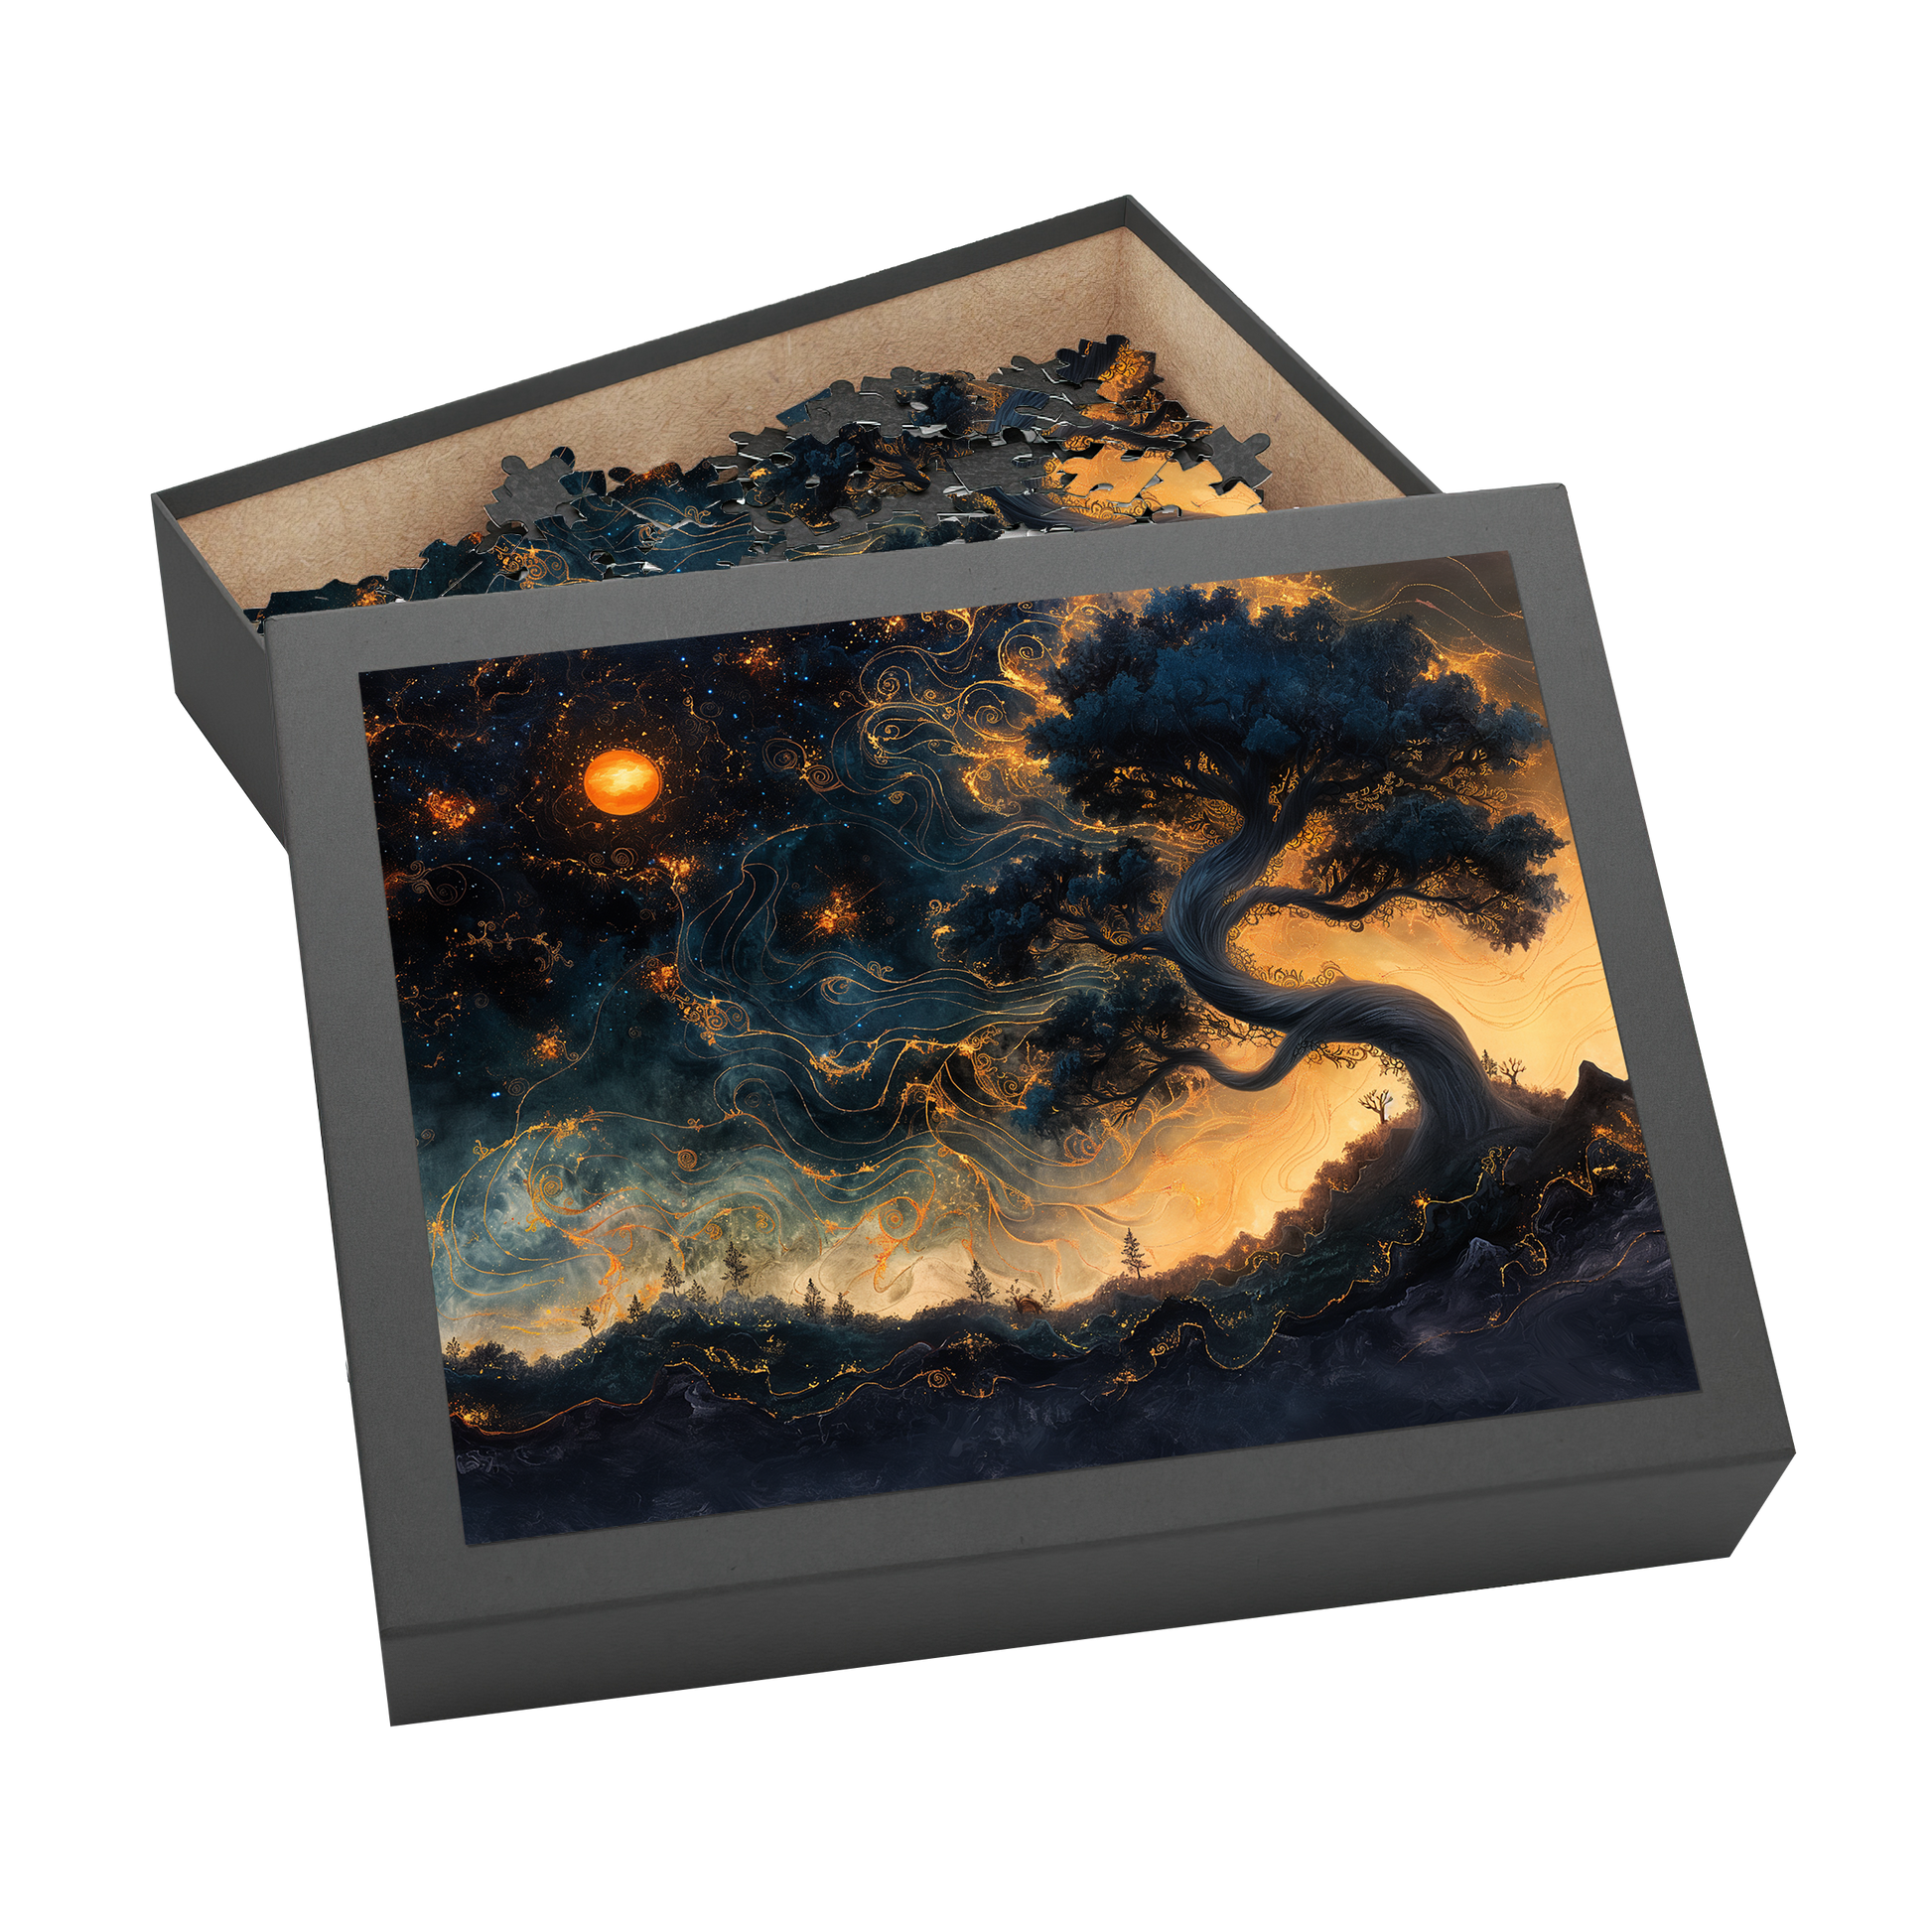 World Tree 03 - Premium Jigsaw Puzzle, Ornate, Fantasy - Multiple Sizes Available